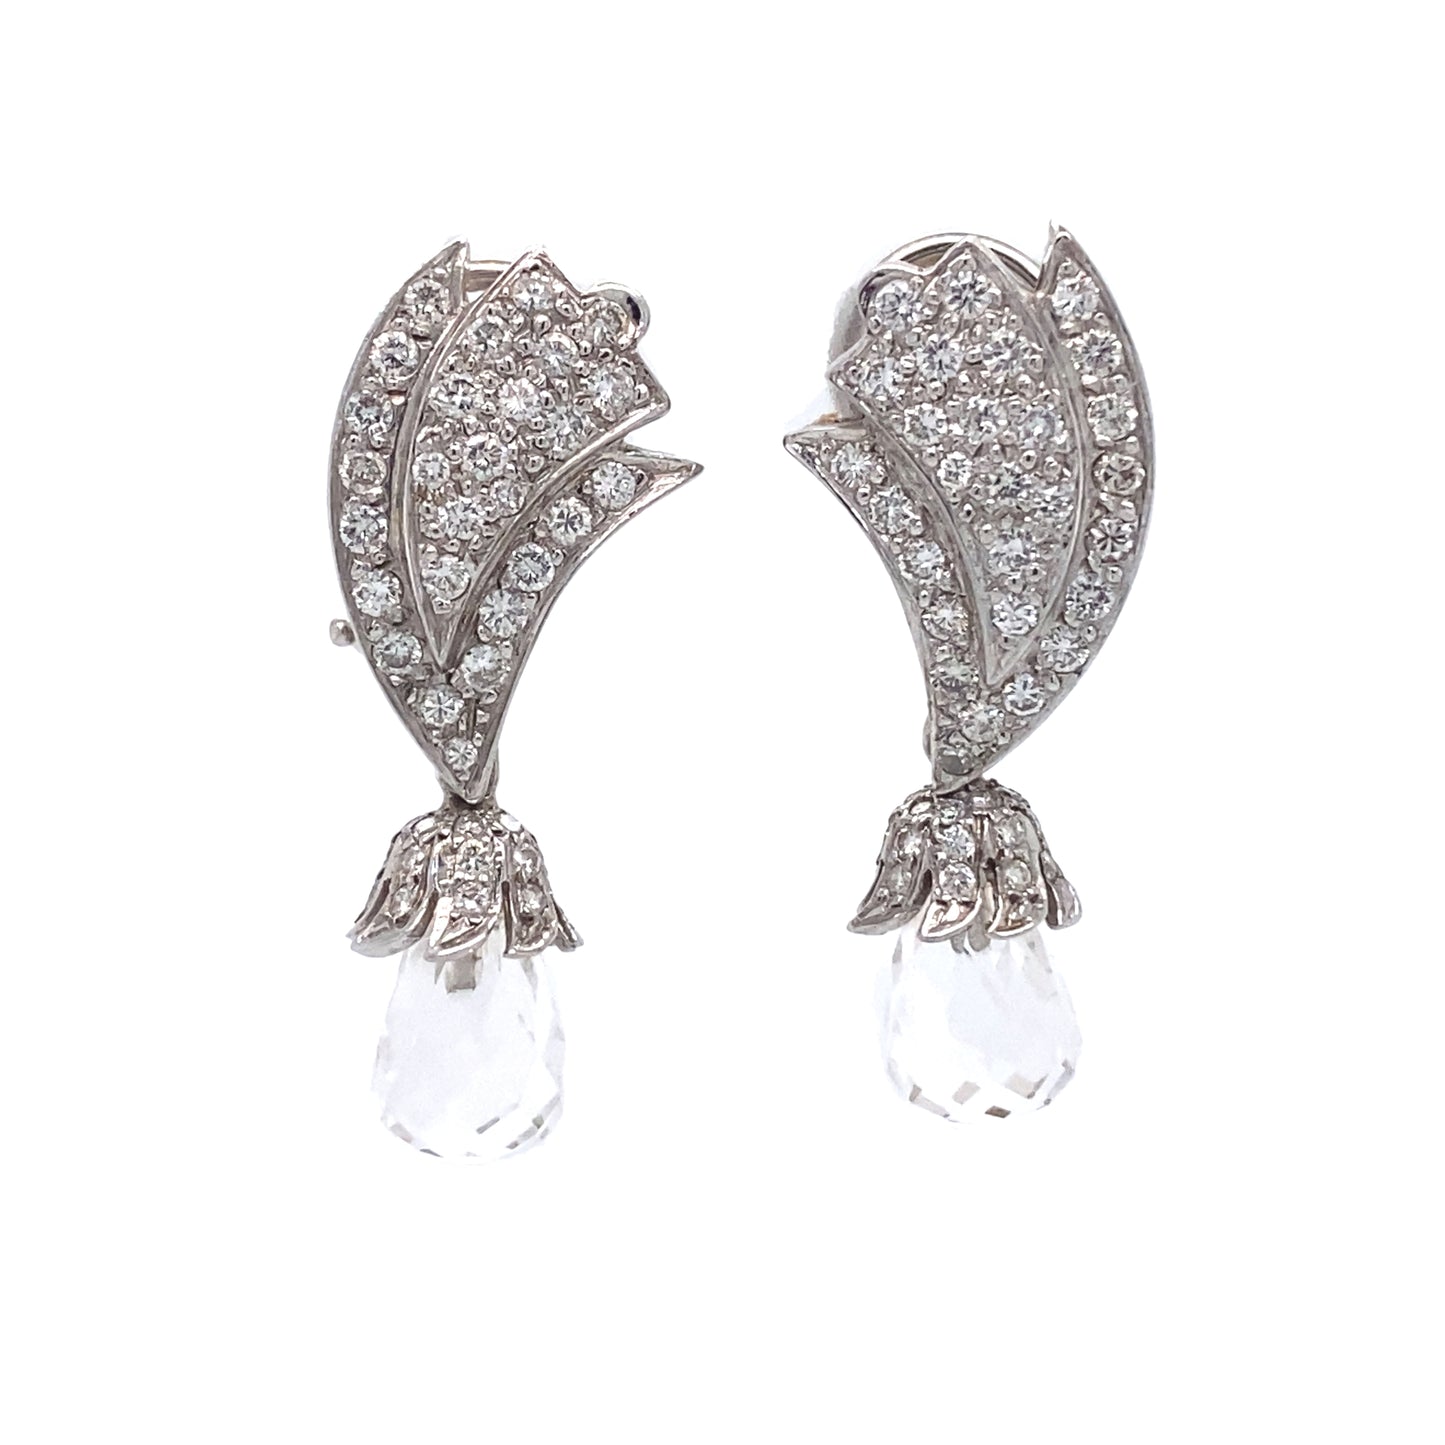 Circa 1980s Kunzite Briolette and Diamond Drop Earrings in 18K White Gold